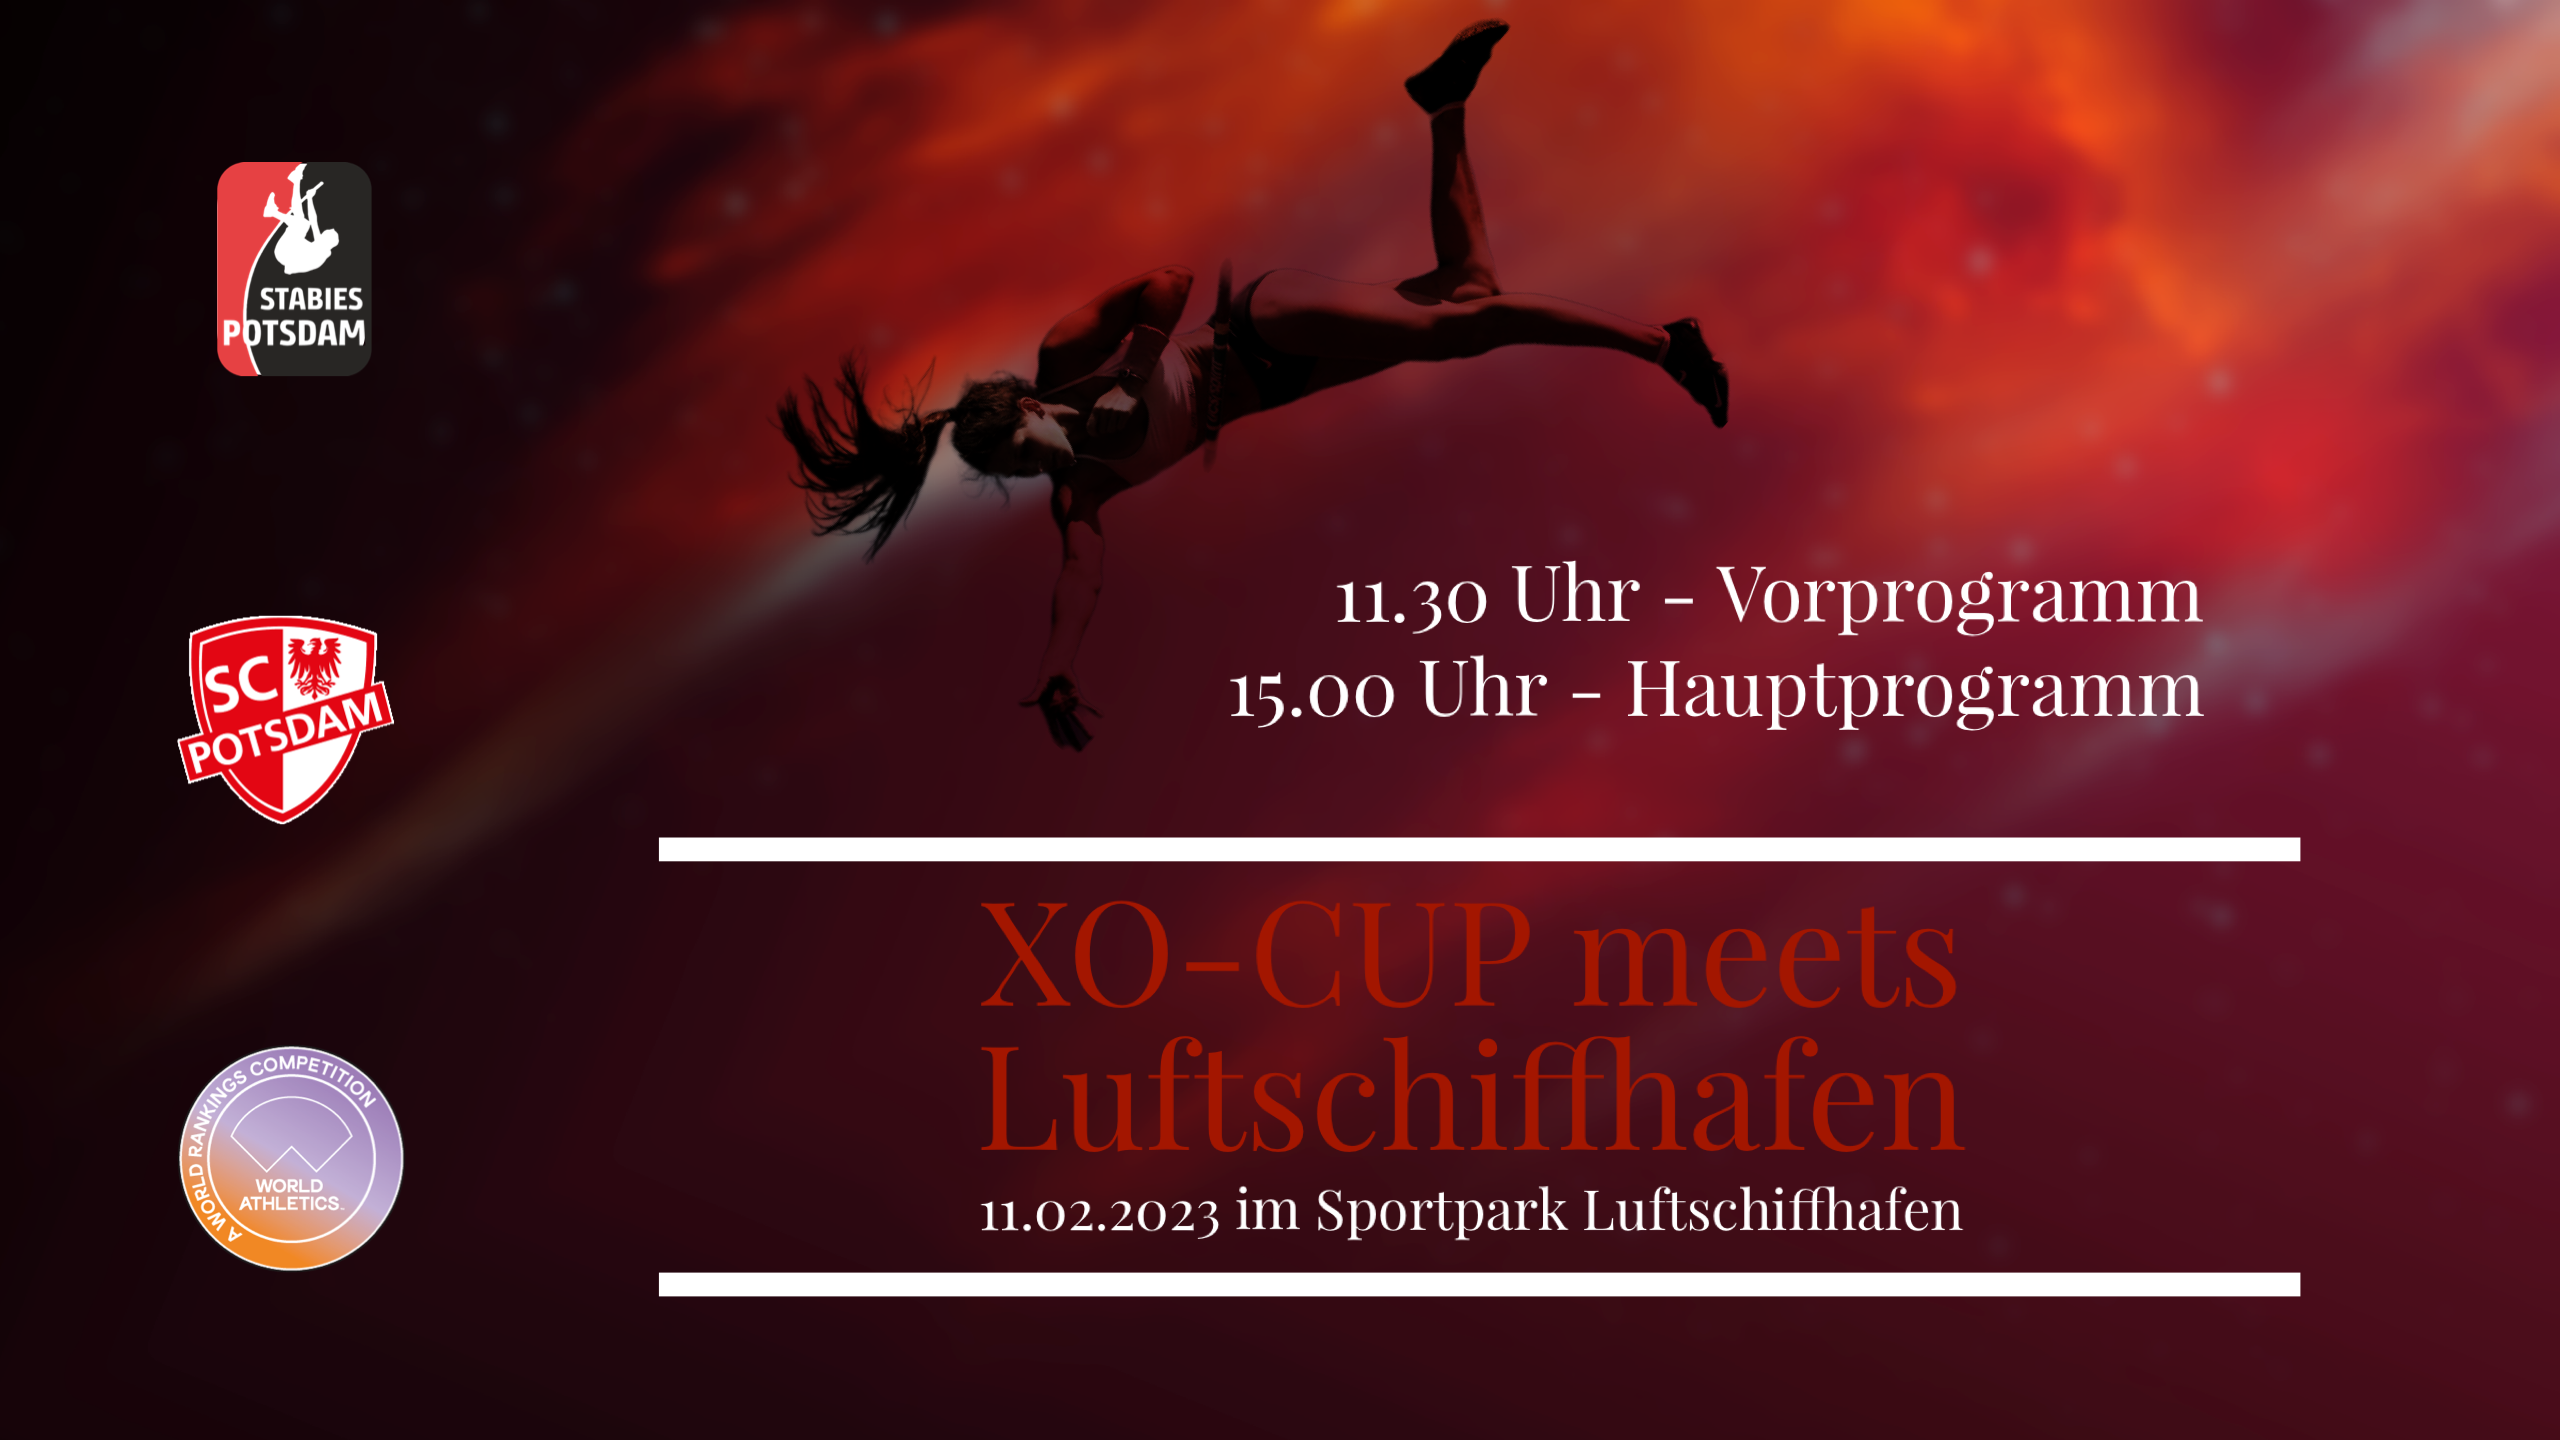 XO-CUP meets Luftschiffhafen